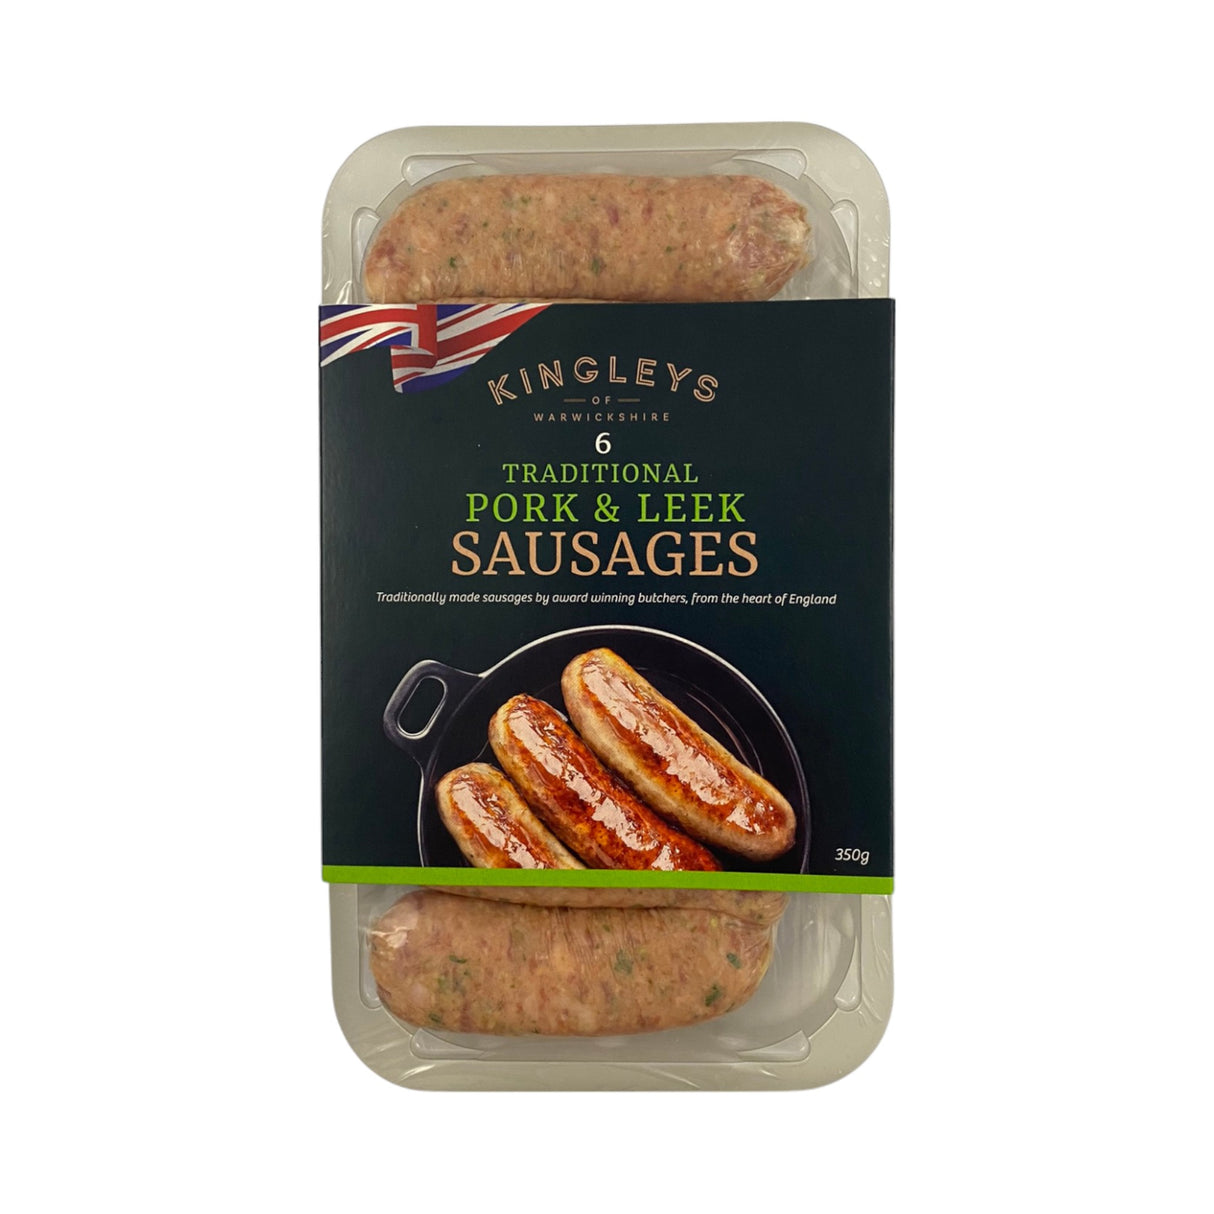 Kingleys - Pork and Leek Sausages 350g